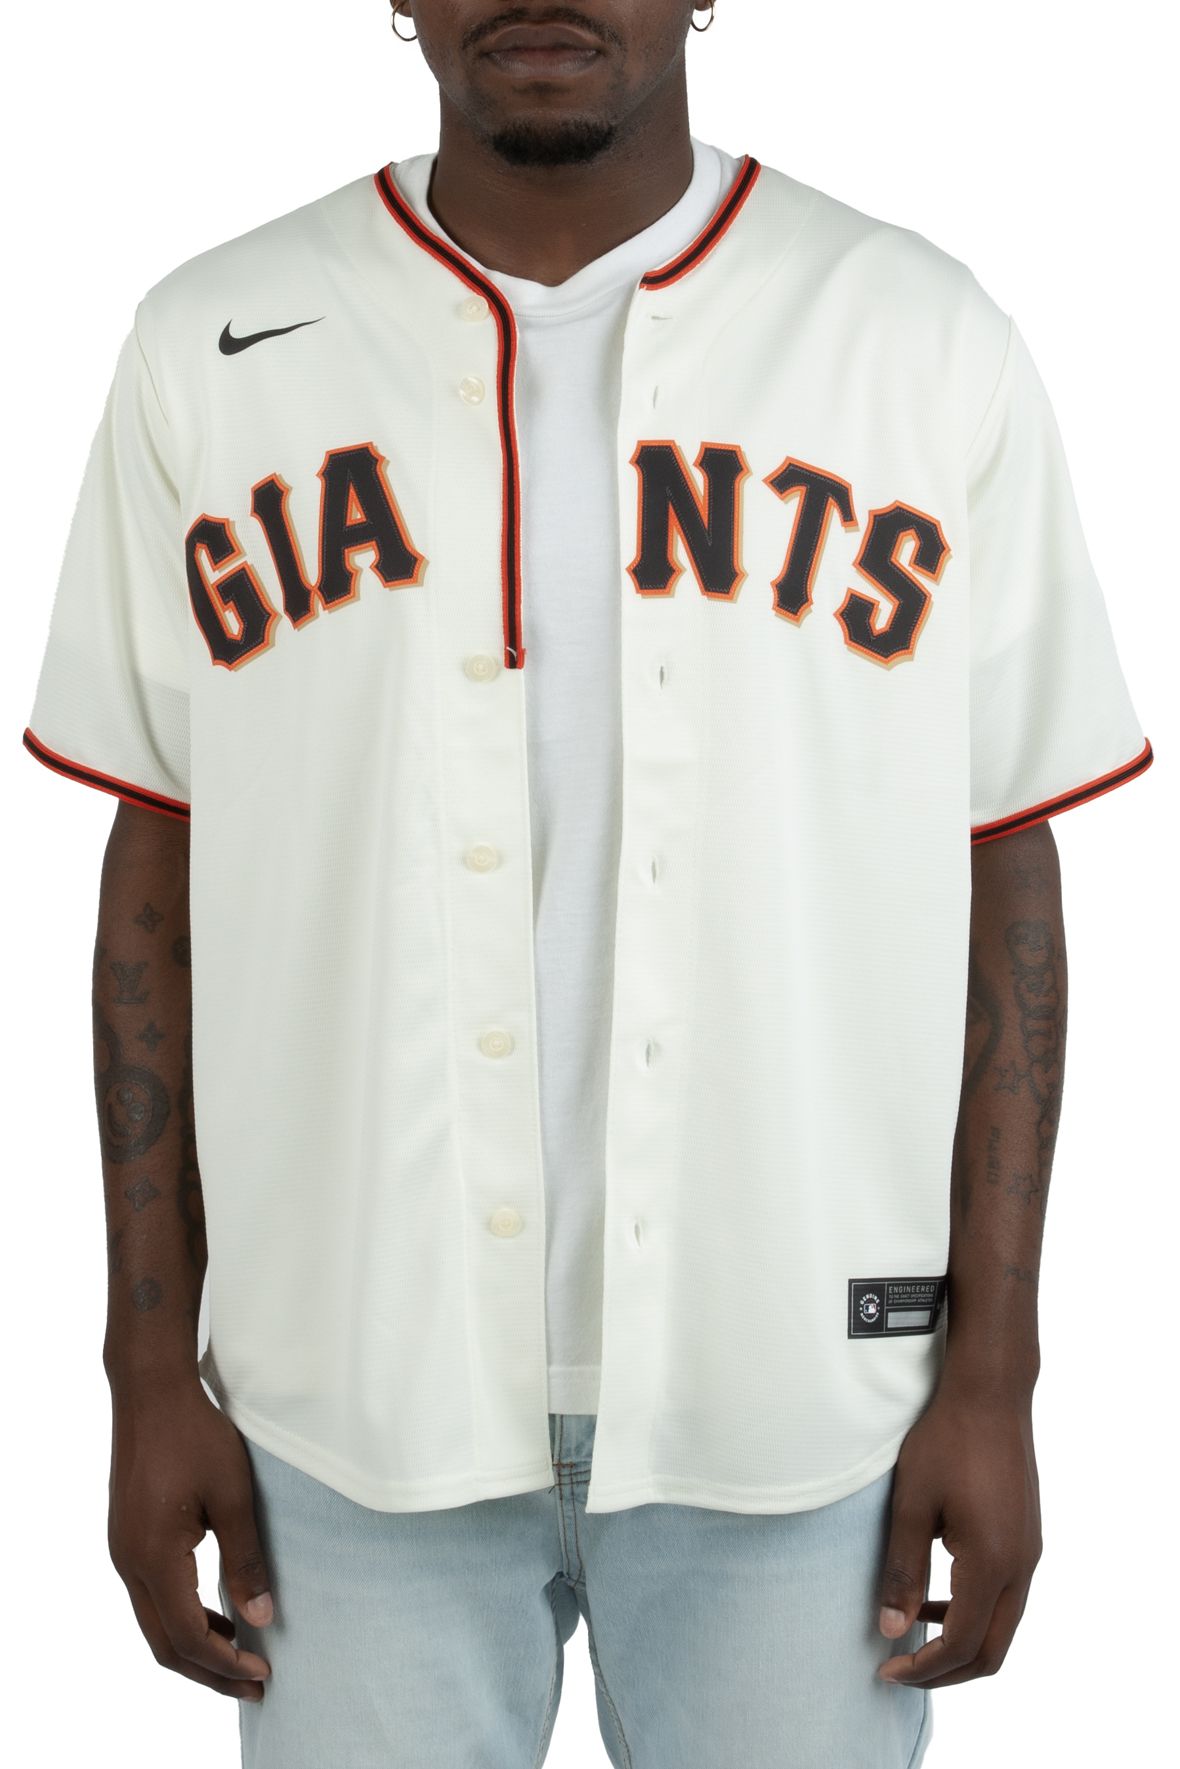 San Francisco Giants Baseball MLB Starter Jersey XL X-large mens